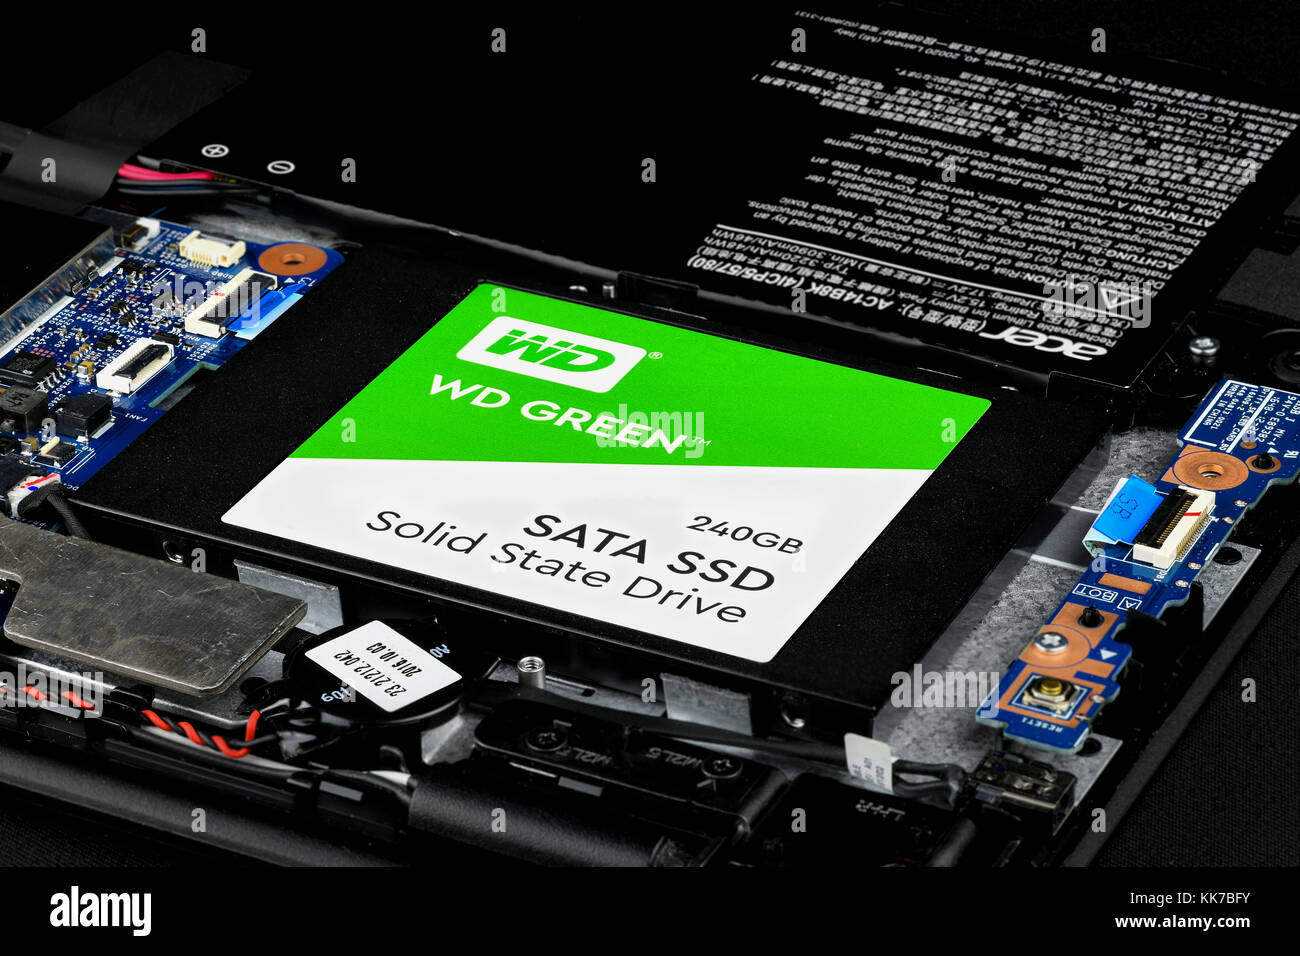 Green SATA SSD-Festplatte eines Laptops Stockfotografie - Alamy